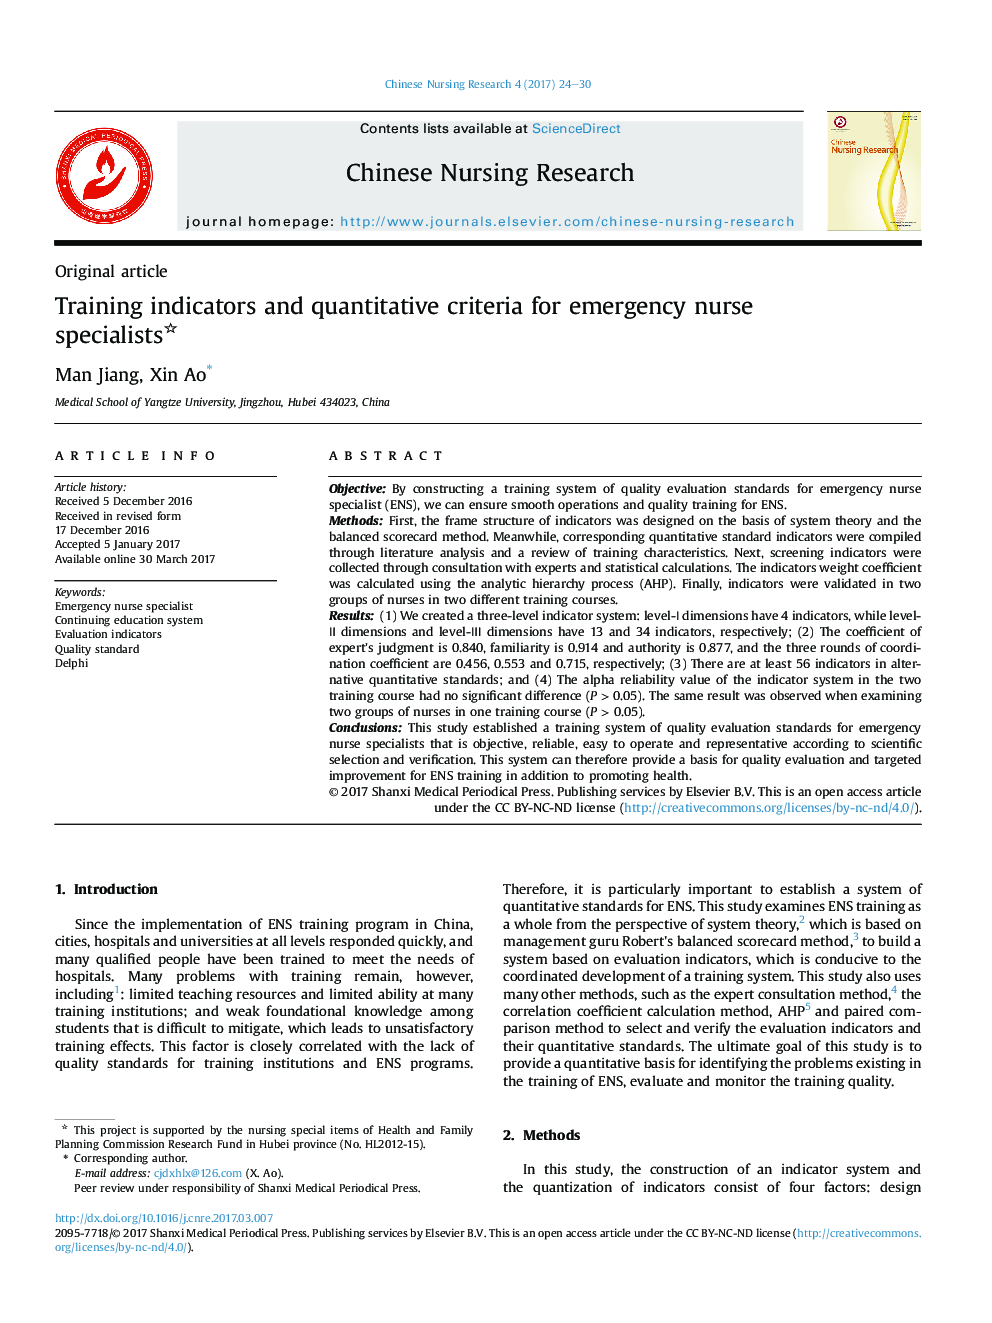 Training indicators and quantitative criteria for emergency nurse specialists